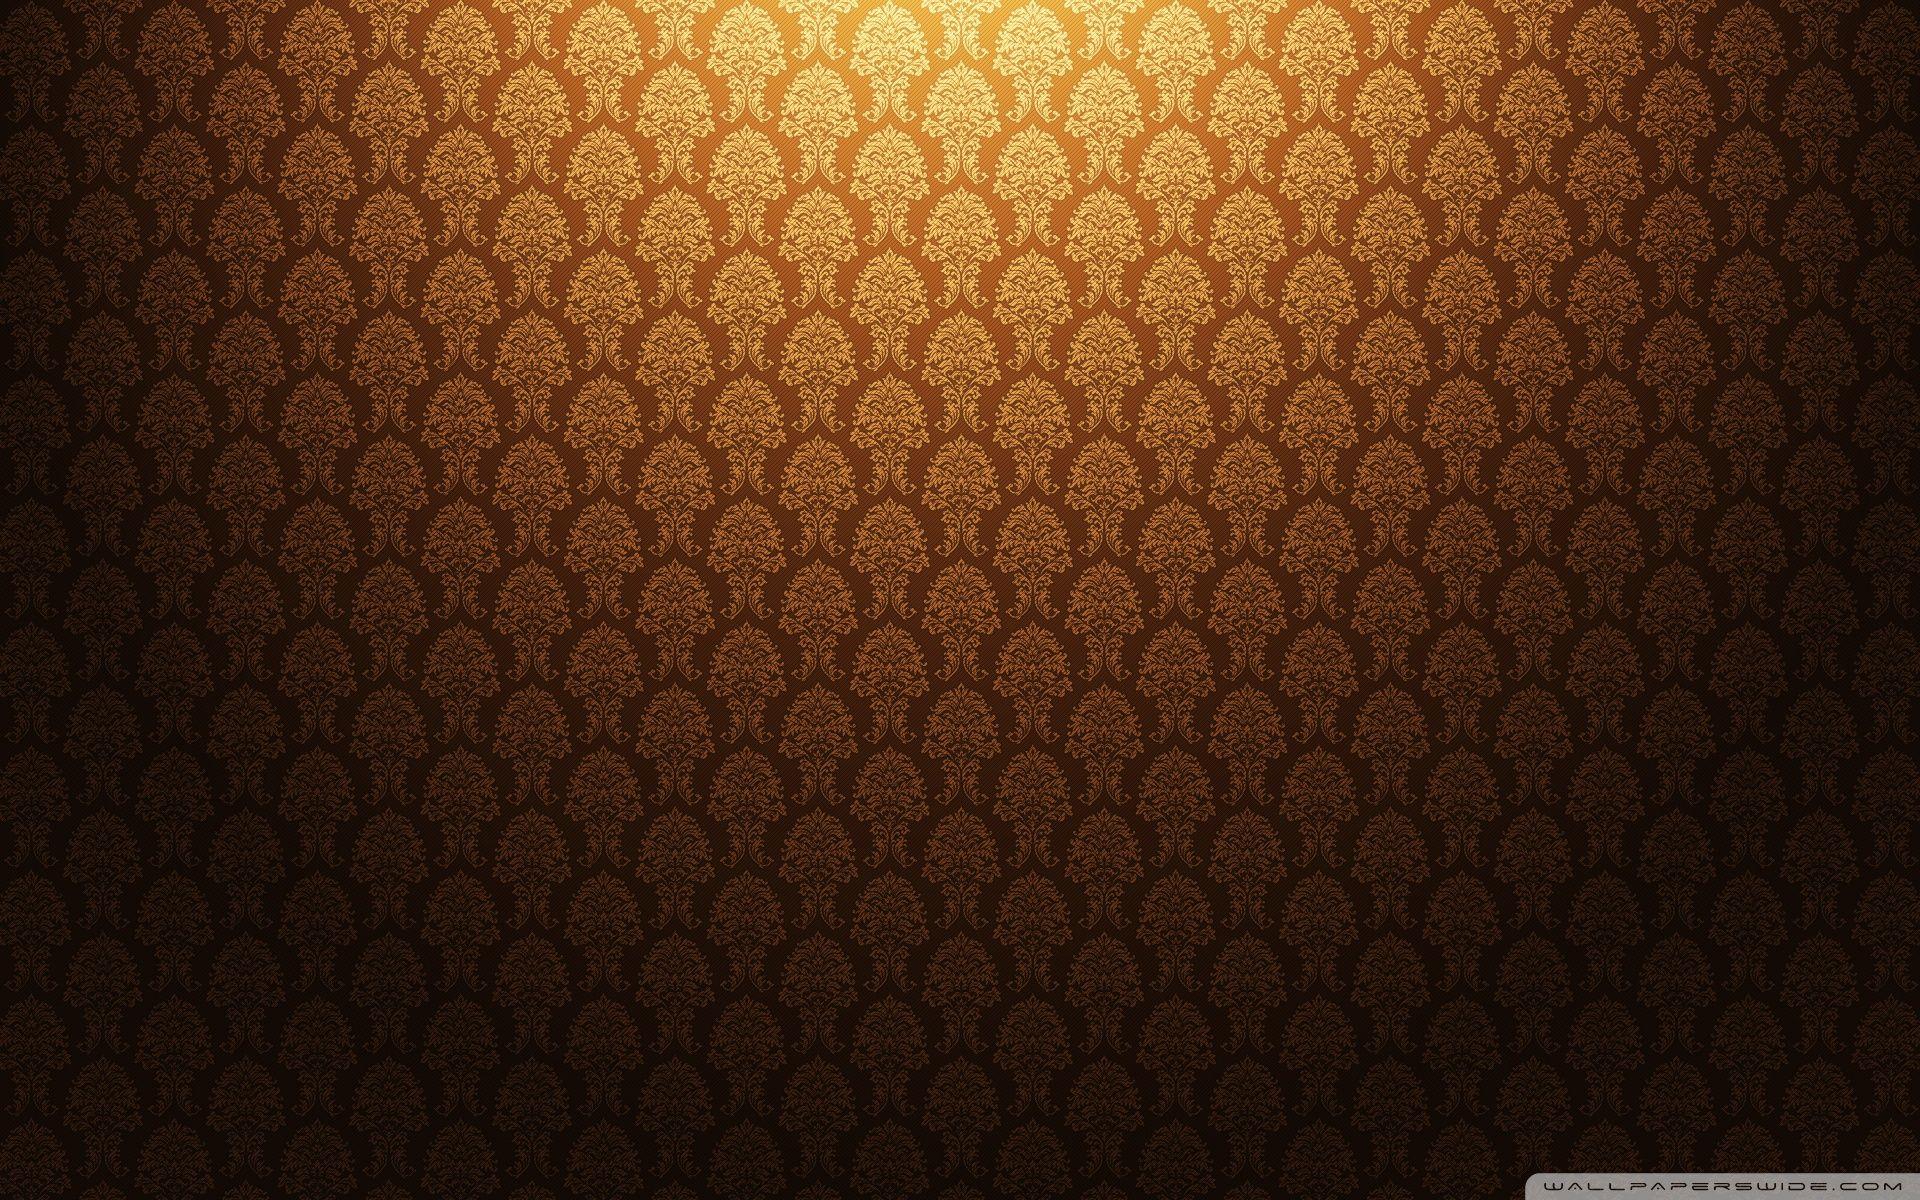 Vintage Gold Wallpaper. VIP Wallpaper. HD Wallpaper for Desktop